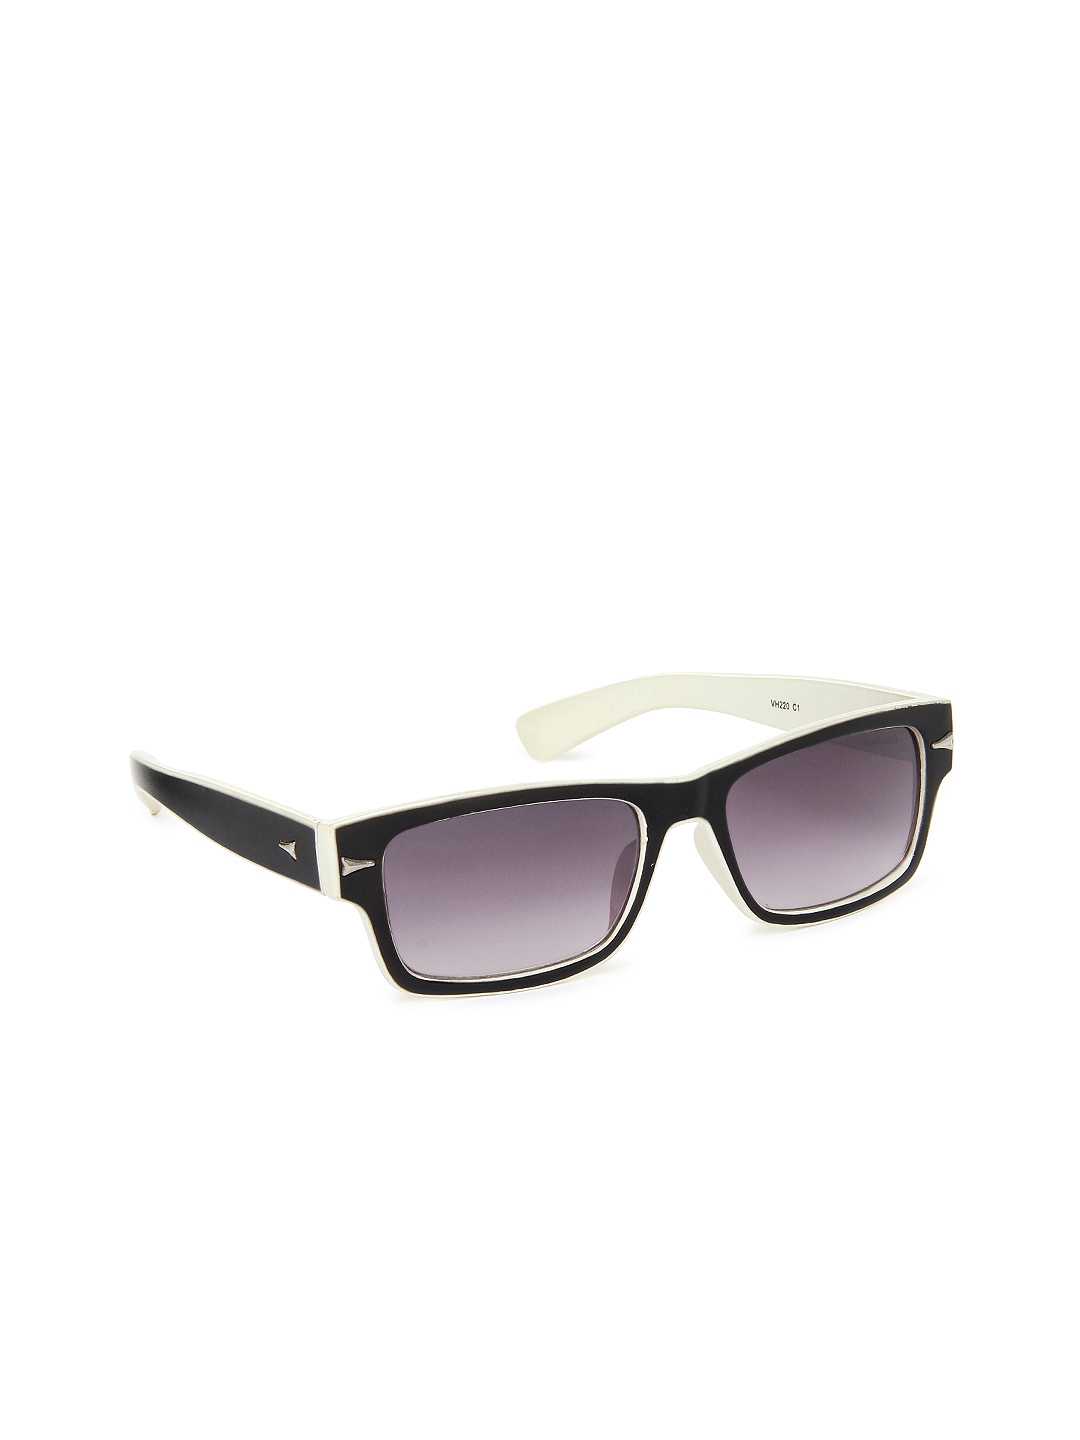 Van Heusen Unisex Sunglasses VH220-C2